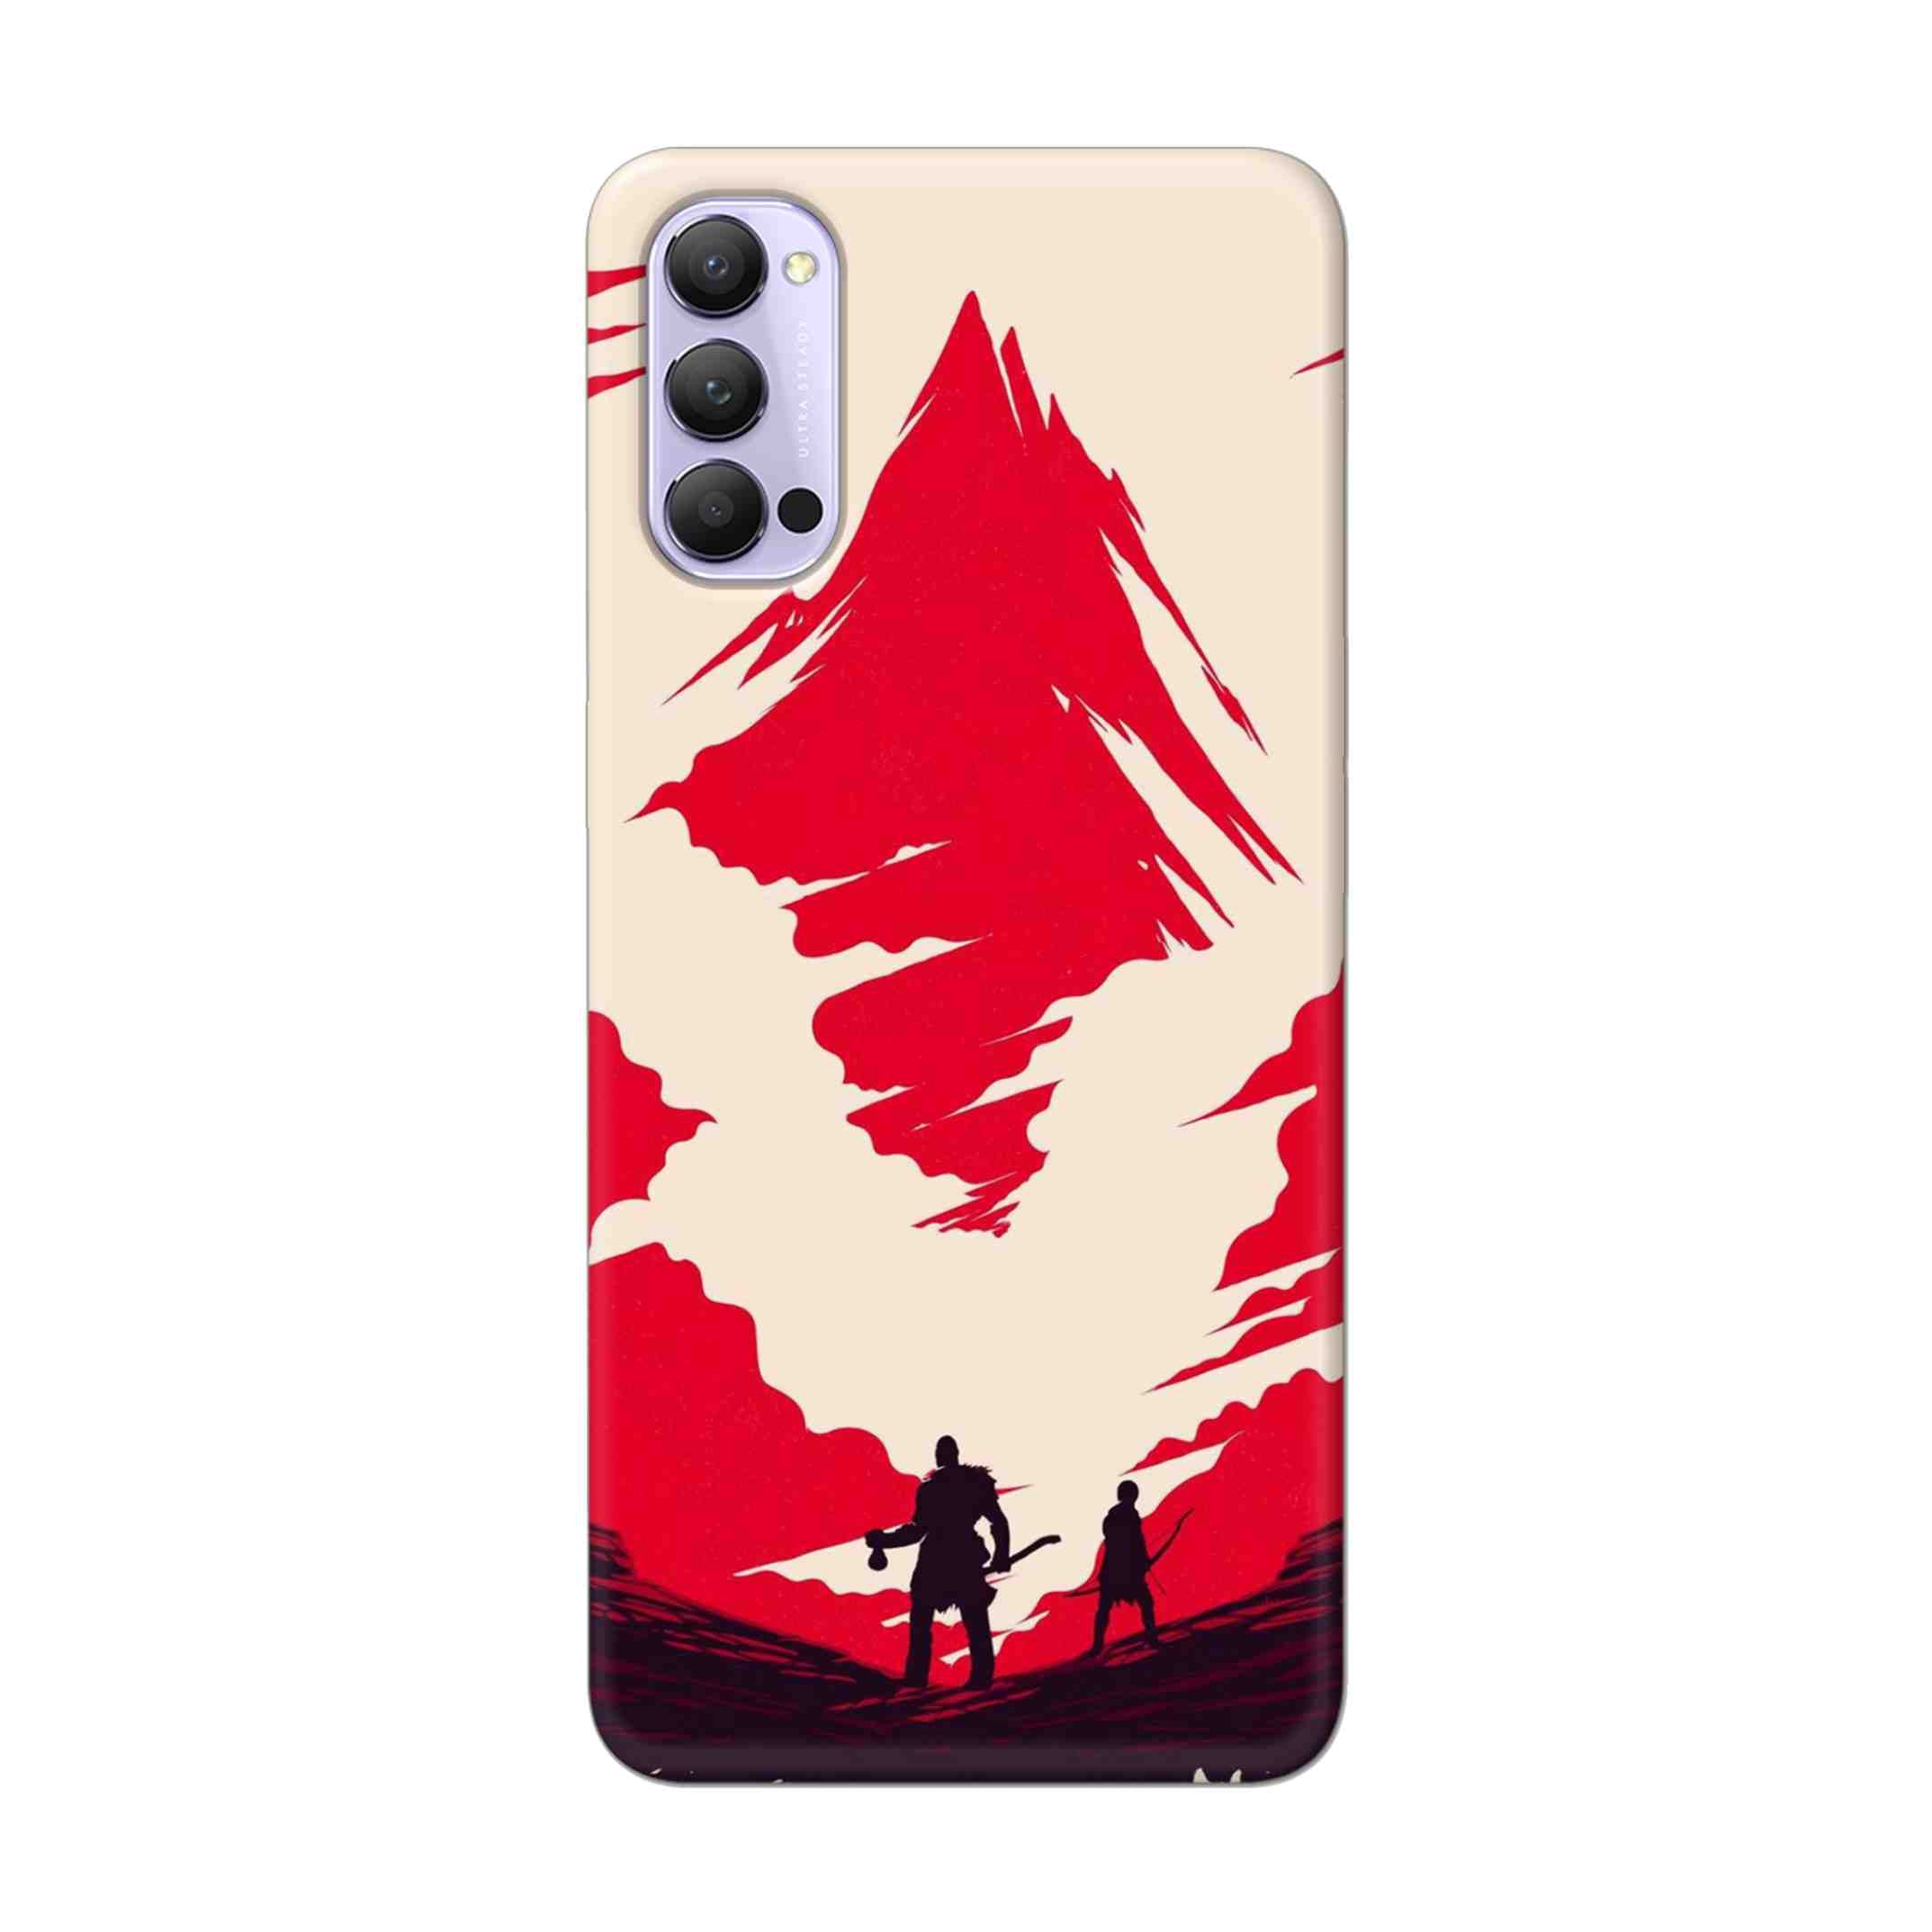 Buy God Of War Art Hard Back Mobile Phone Case Cover For Oppo Reno 4 Pro Online